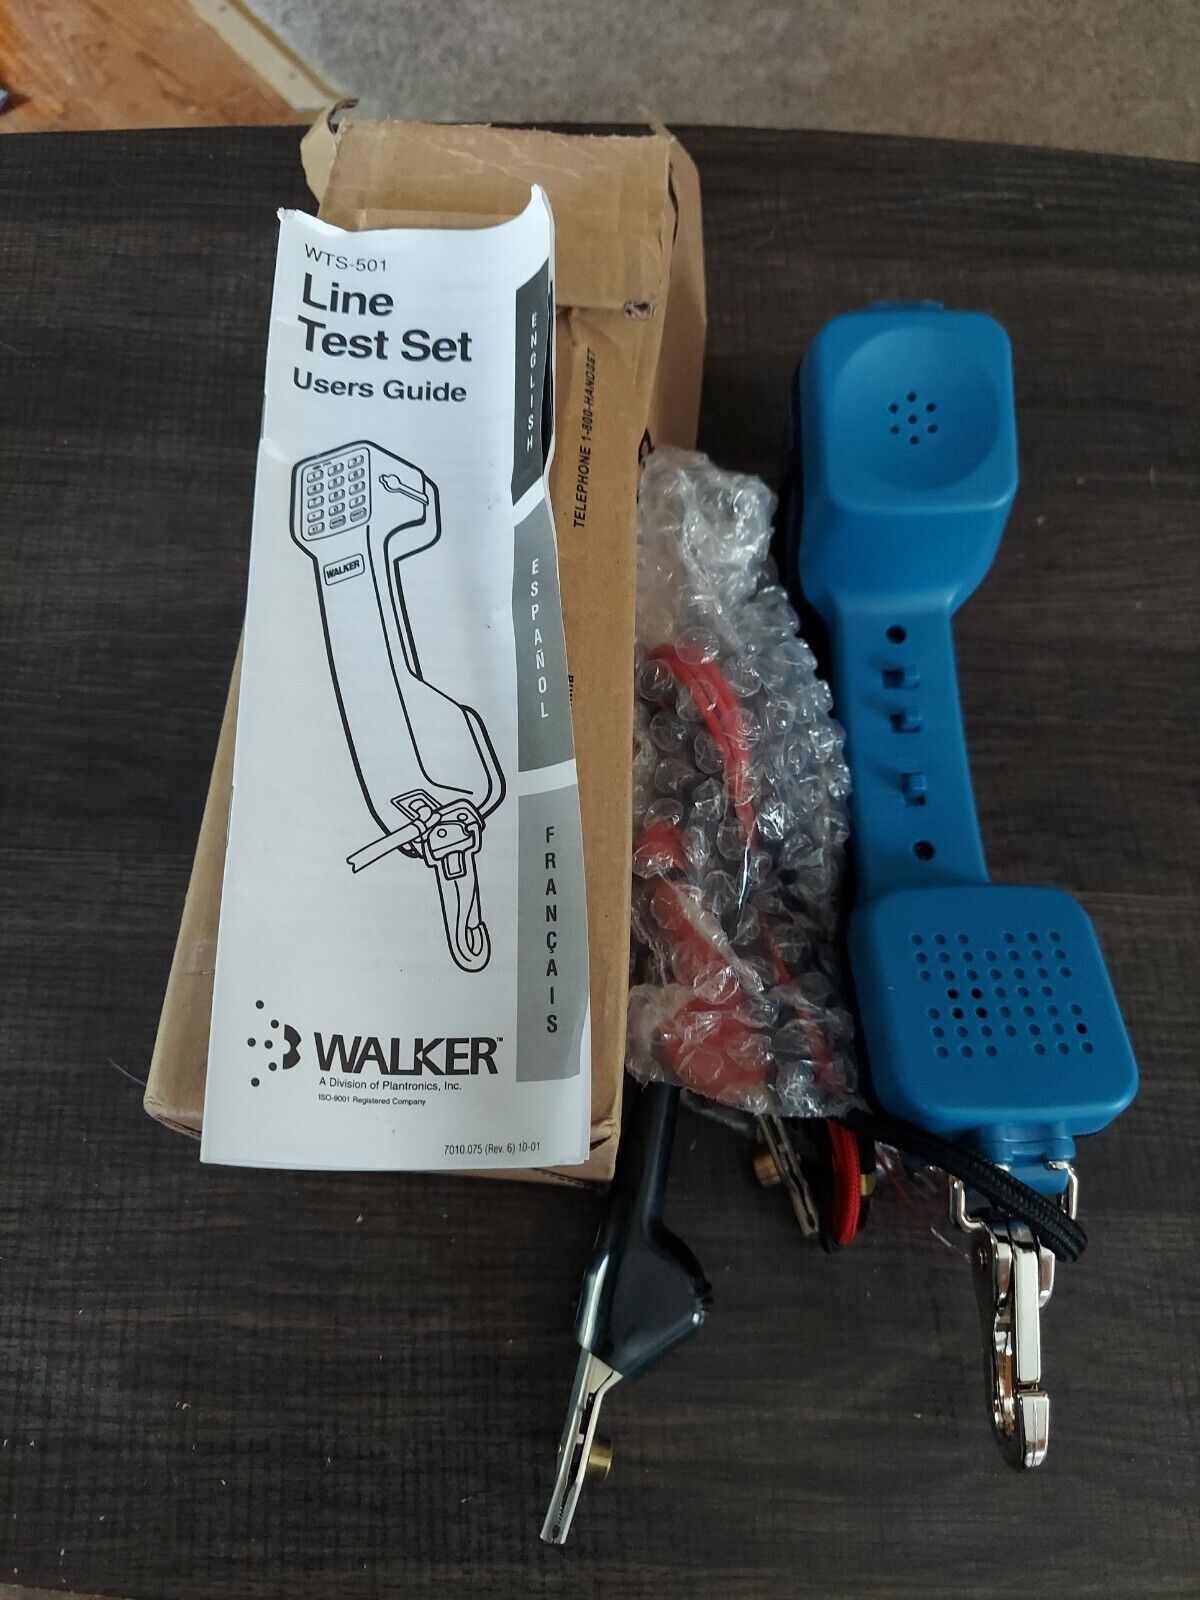 Walker Hearing Aid-compatible Handset. Wts-501 